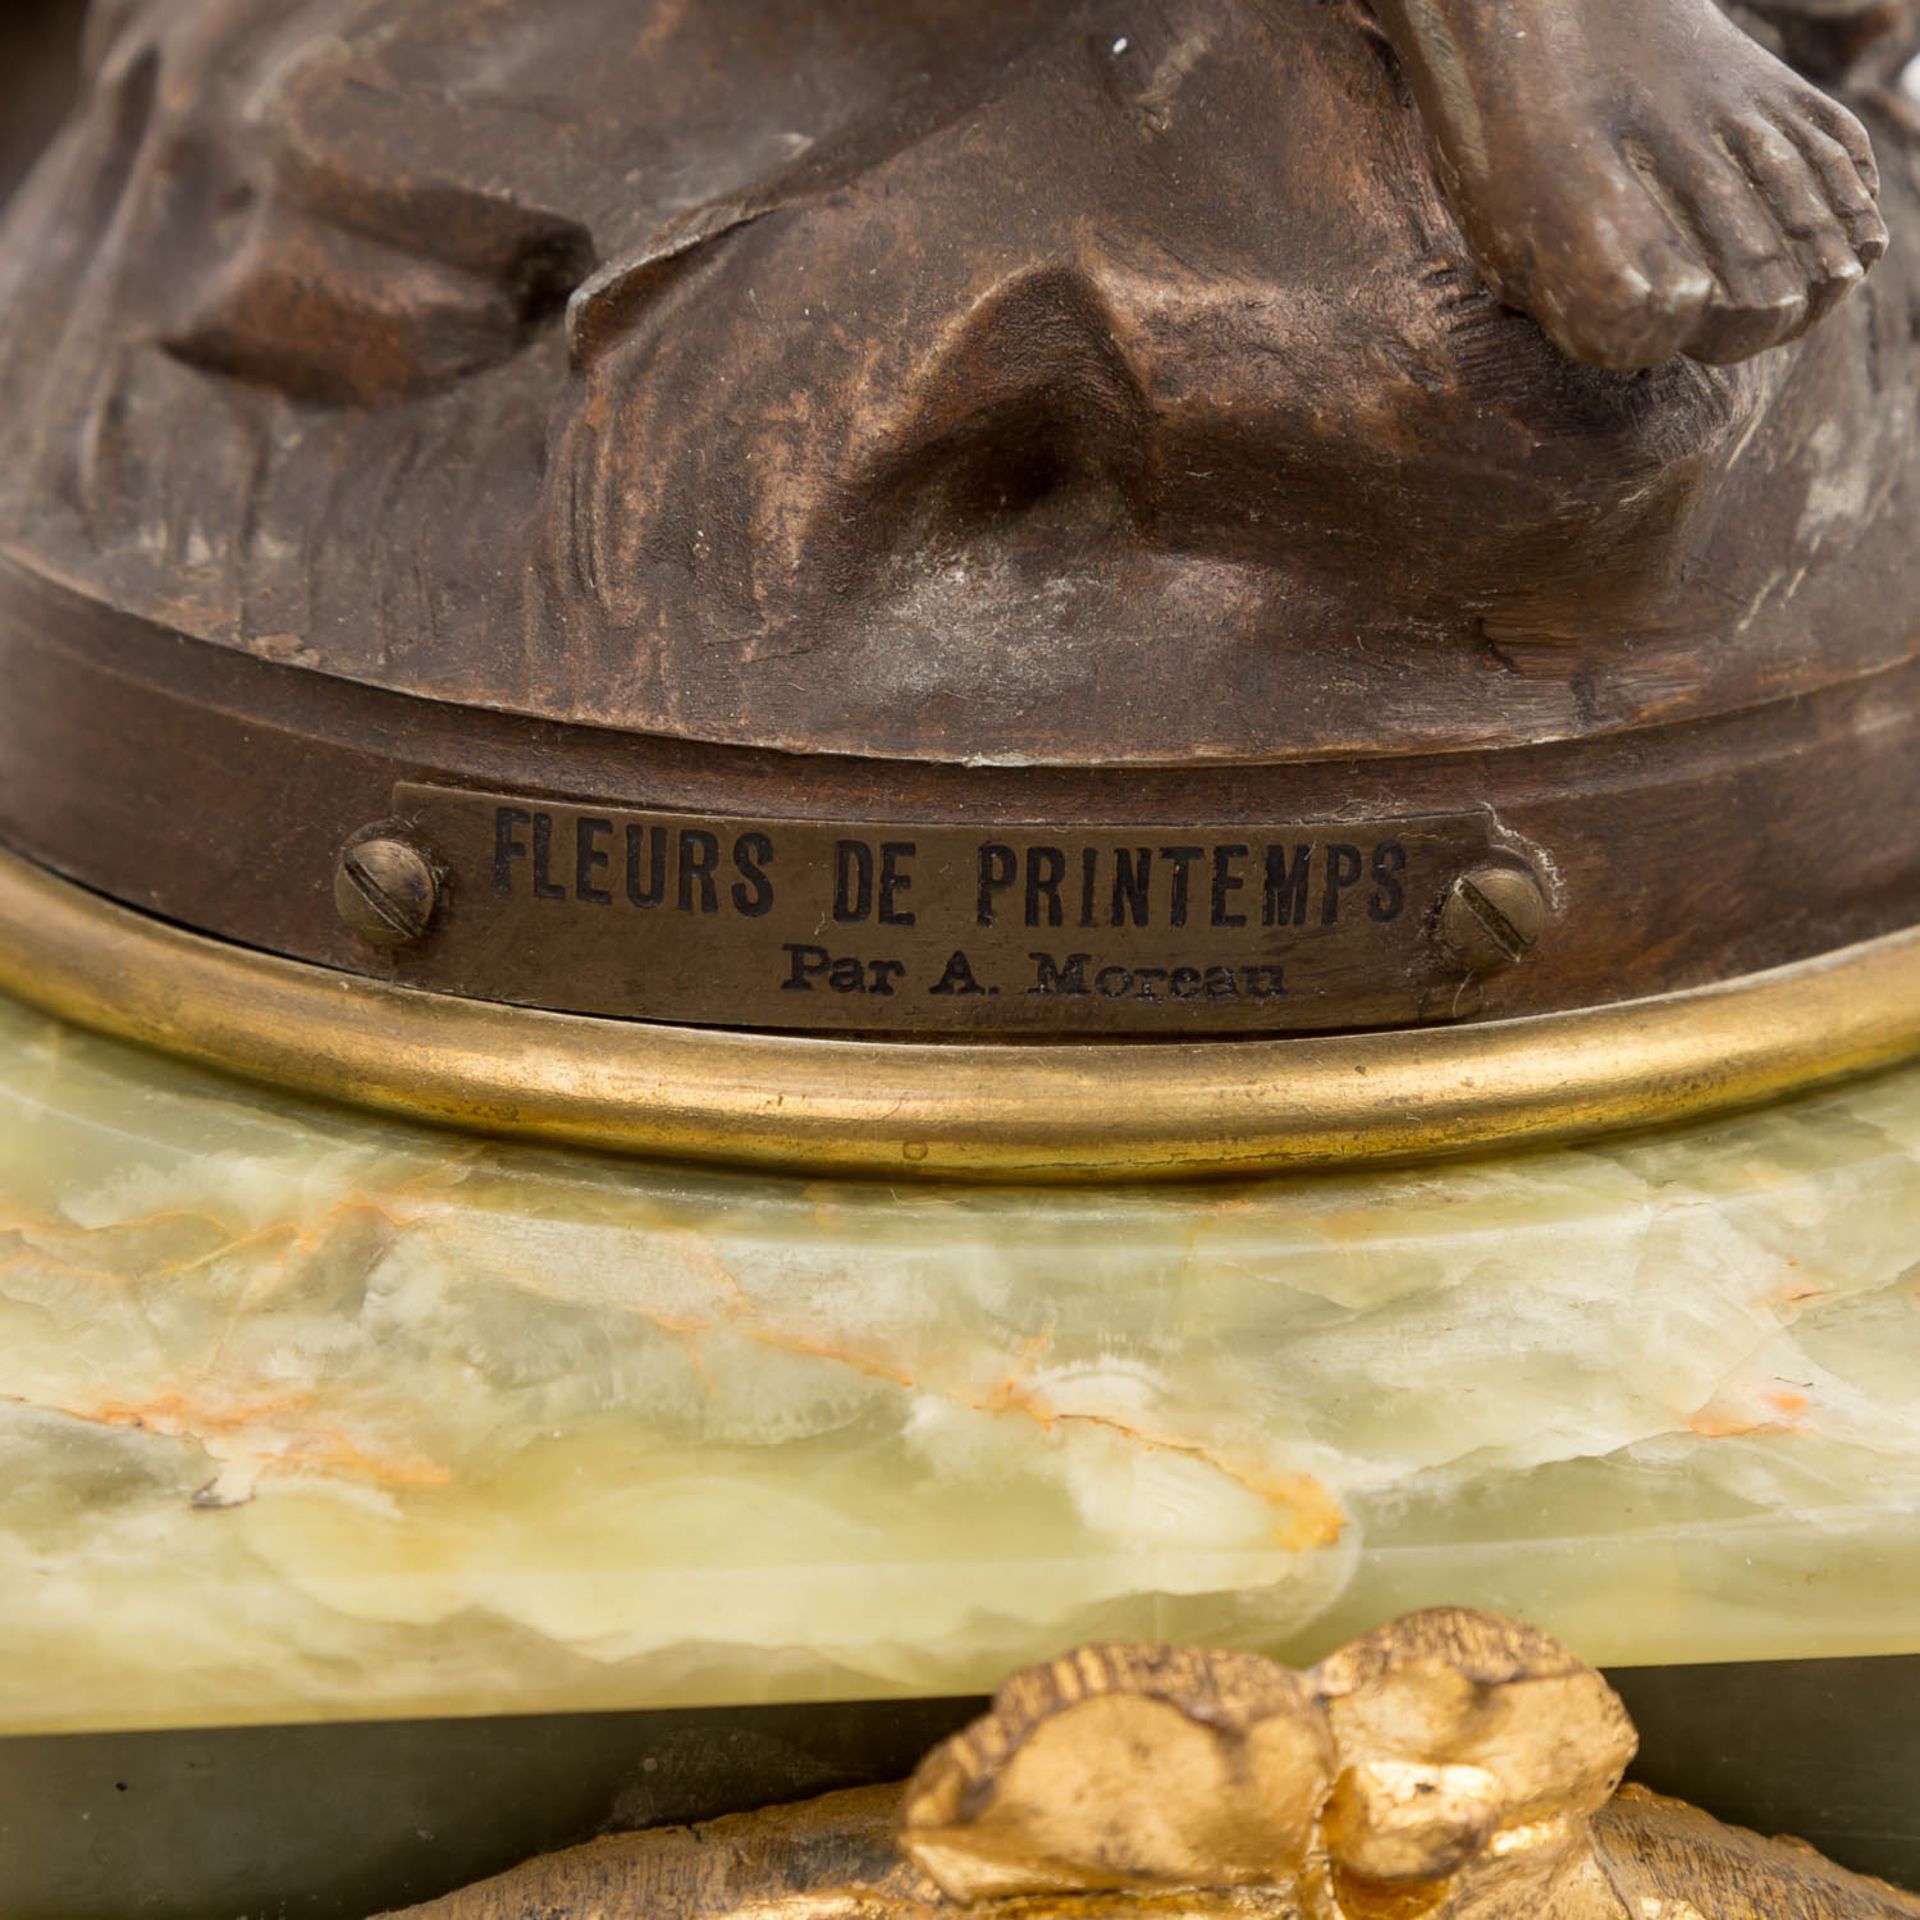 FIGURENPENDULE "FLEURS DE PRINTEMPS"Frankreich, um 1900, Metallguss bronziert bzw. feuervergoldet - Bild 2 aus 6